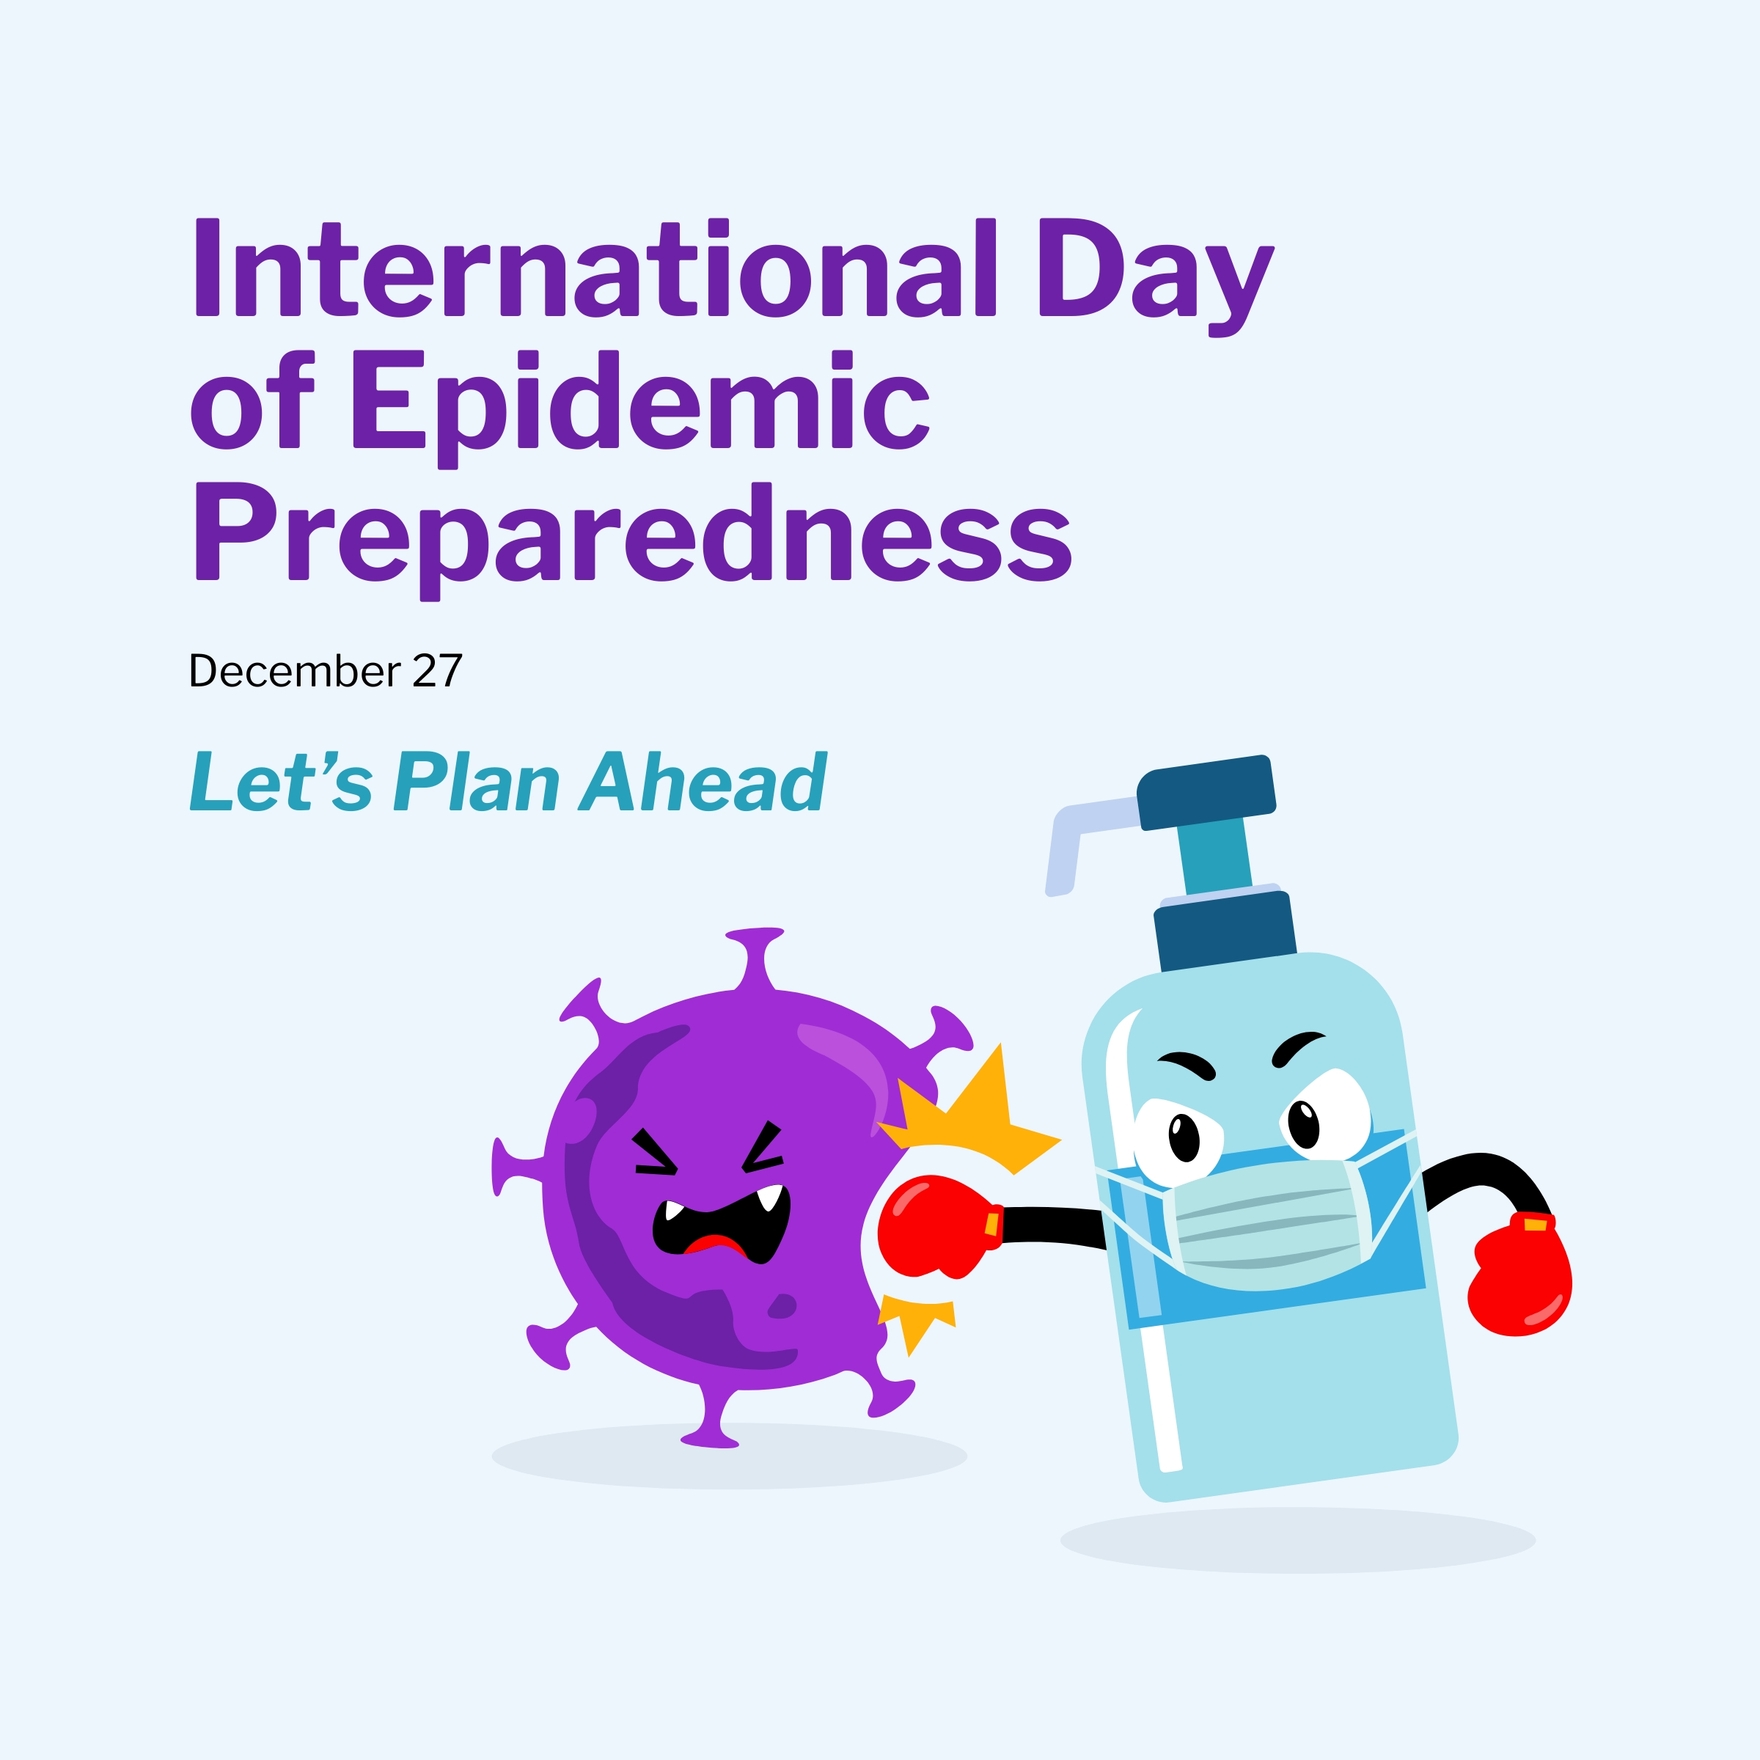 Free International Day of Epidemic Preparedness WhatsApp Post in Illustrator, PSD, EPS, SVG, PNG, JPEG